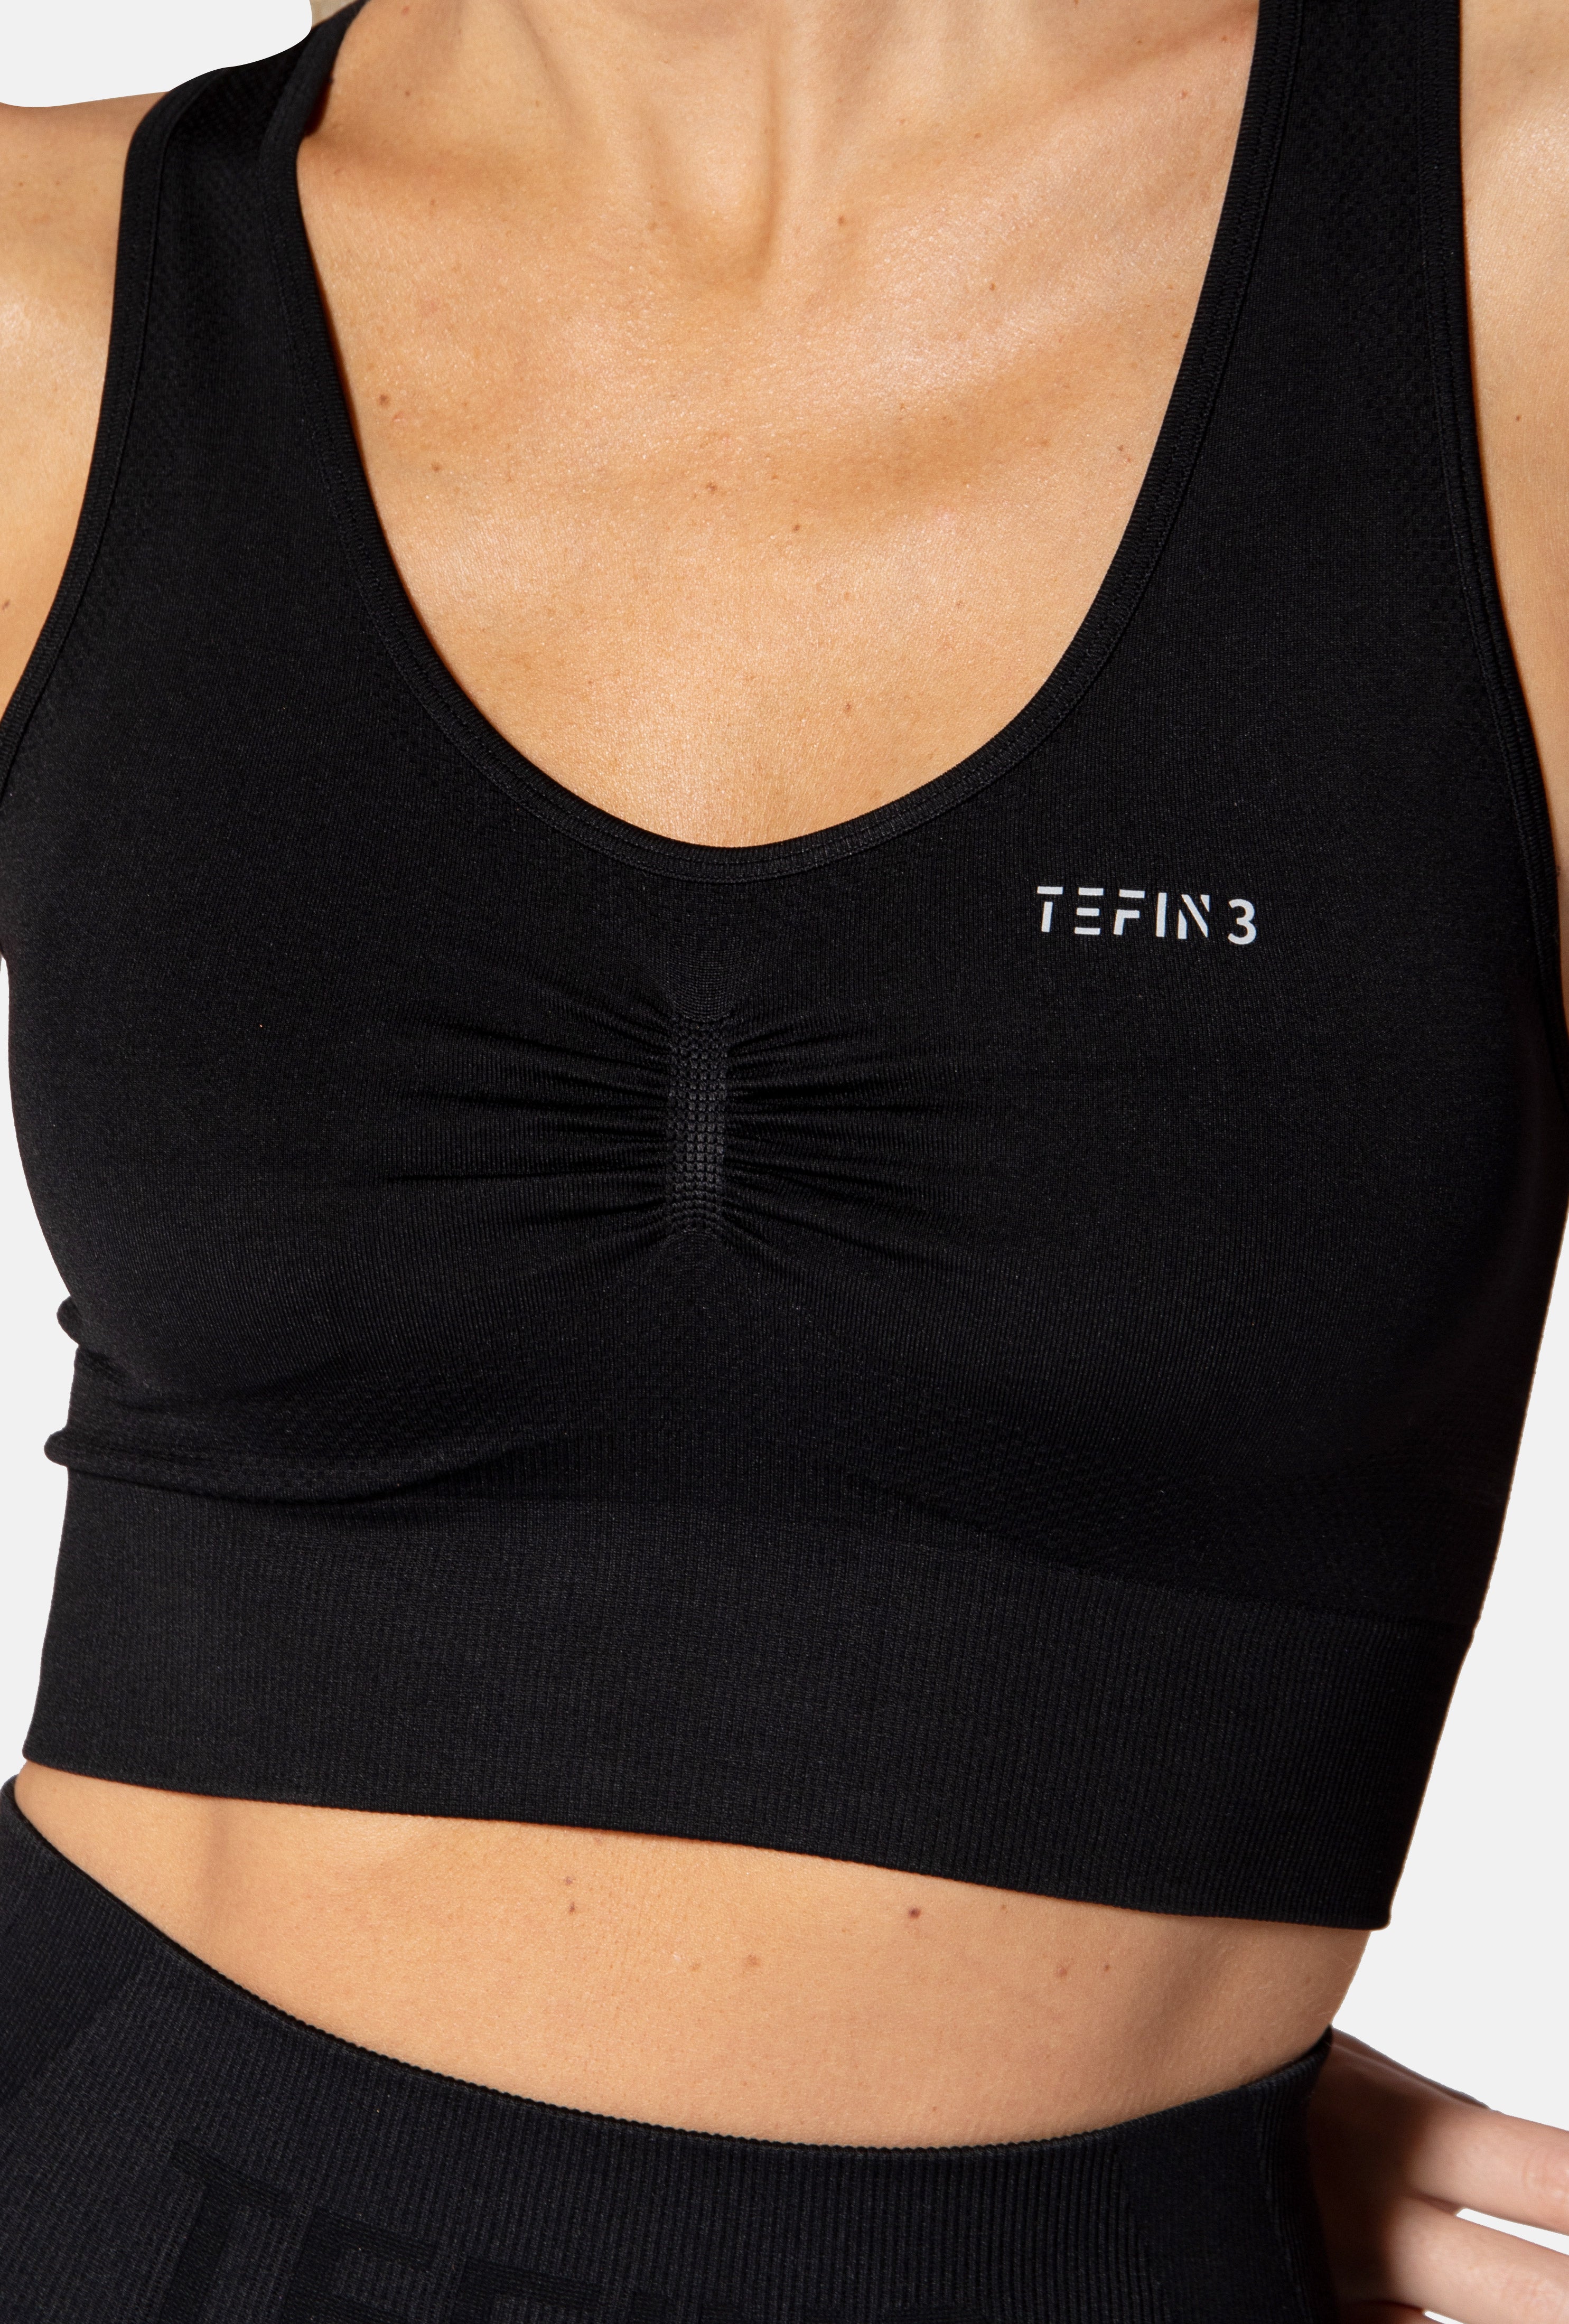 TEFIN3 Comfy Seamless Sports Bra Tight Black (1)